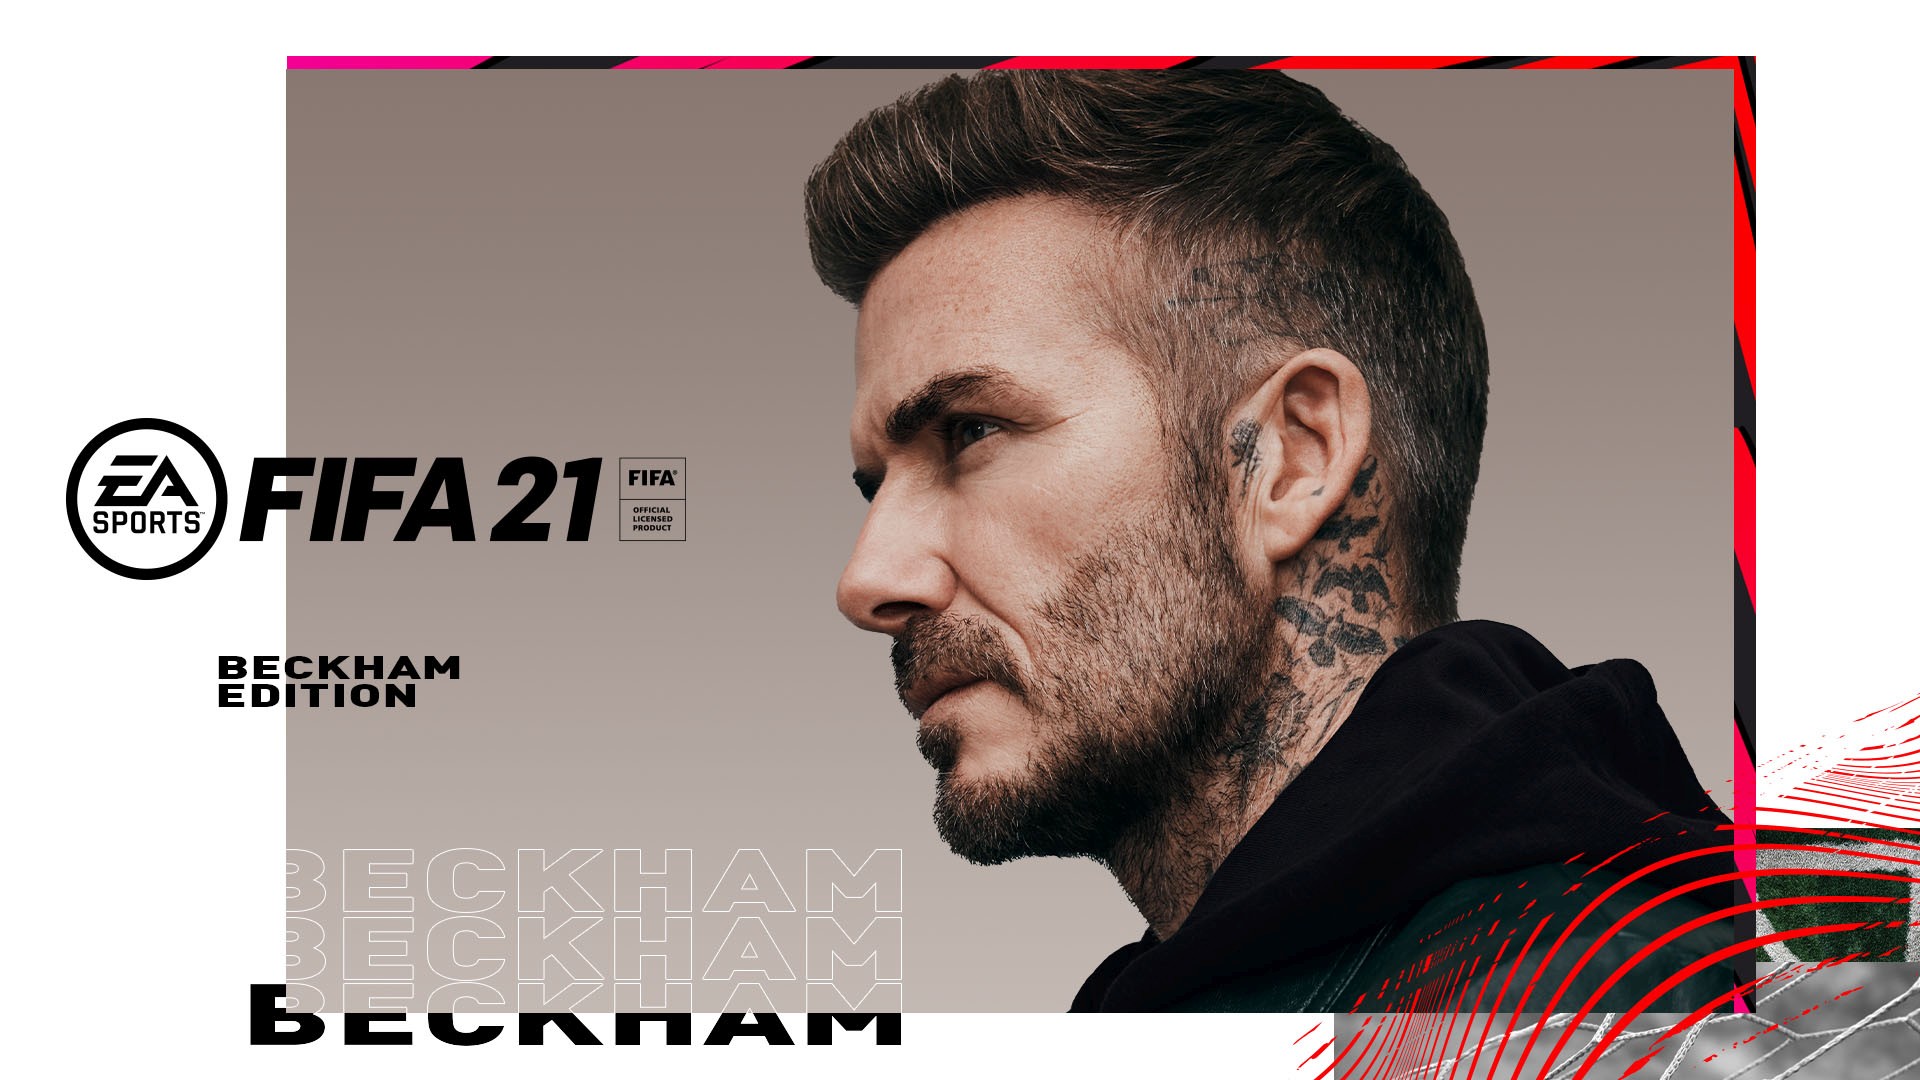 David Beckham is Back in FIFA 21